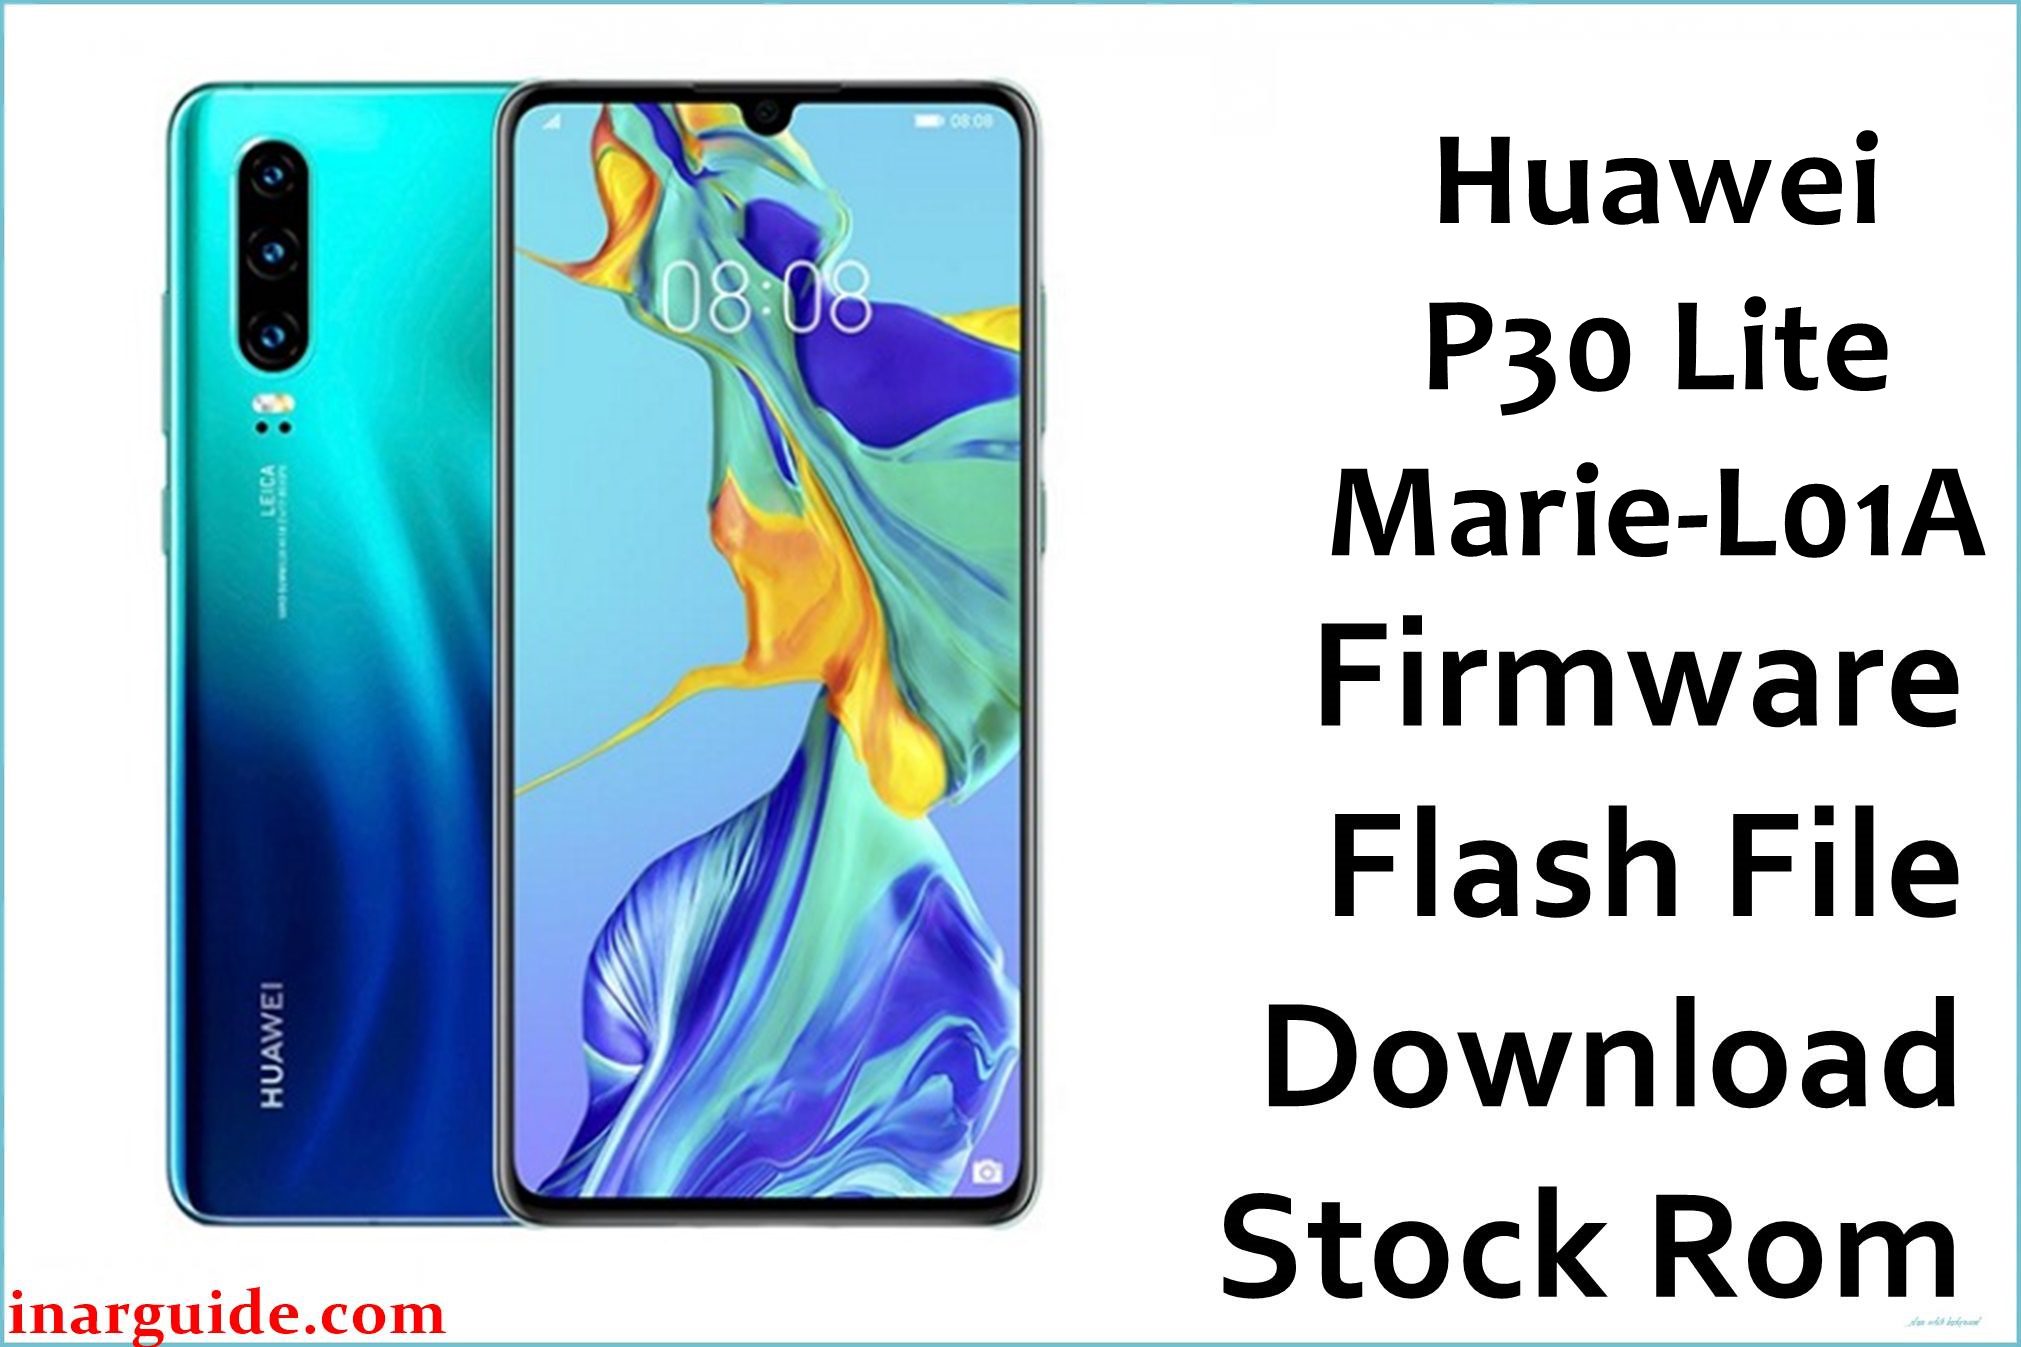 Huawei P30 Lite Marie L01A